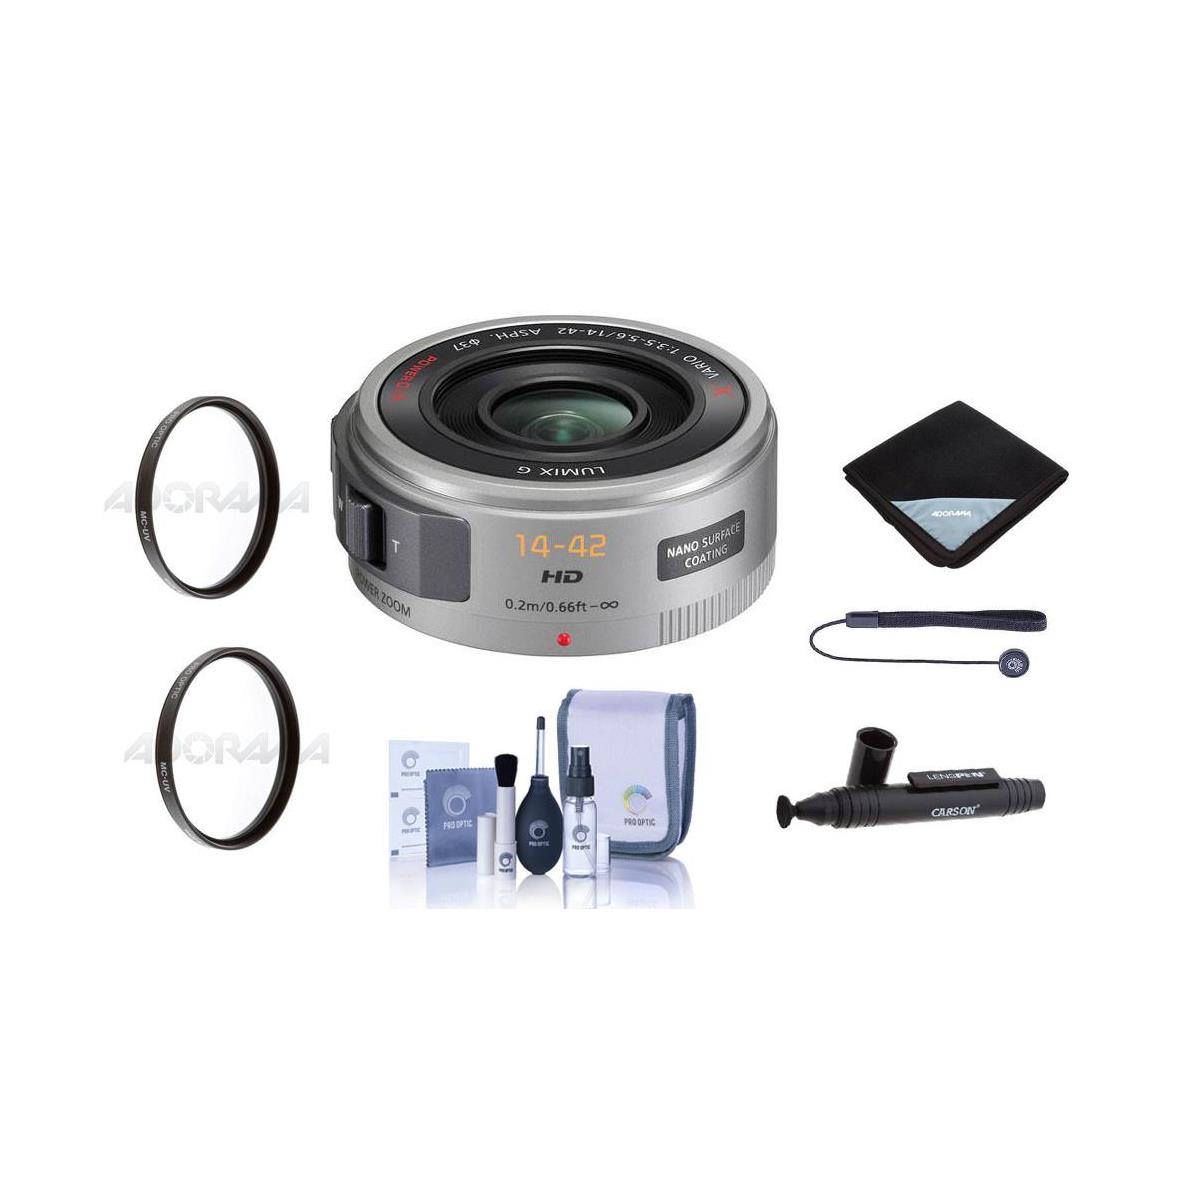 

Panasonic Lumix G X Vario PZ 14-42mm f/3.5-5.6 Lens, MFT w/PC Software & Acc Kit